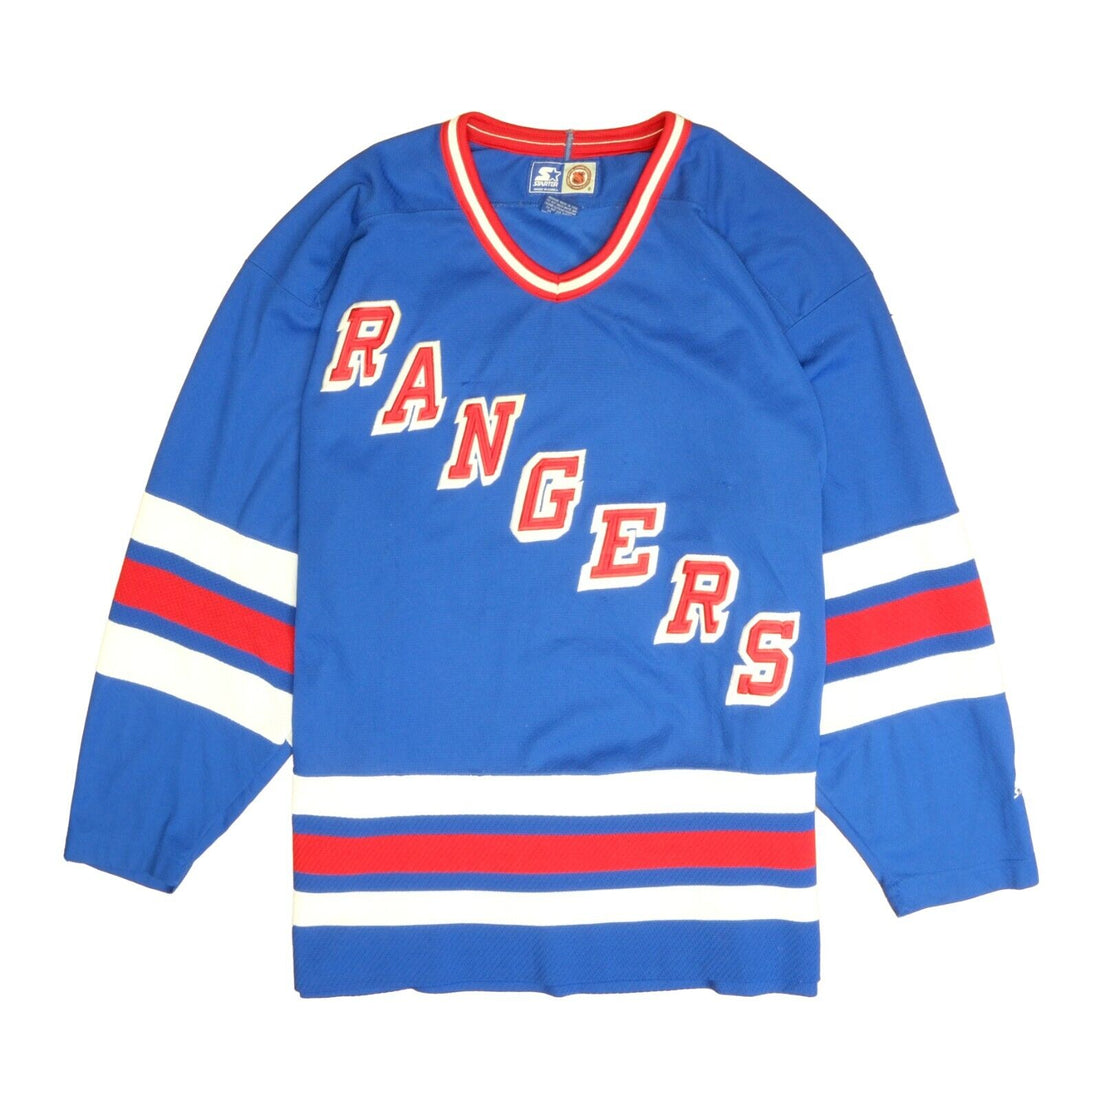 Vintage 1990s Colorado Avalanche NHL Starter Blank Jersey / 90s Sportswear  / NHL Hockey Fan Gear / Athletic Pullover / Throwback